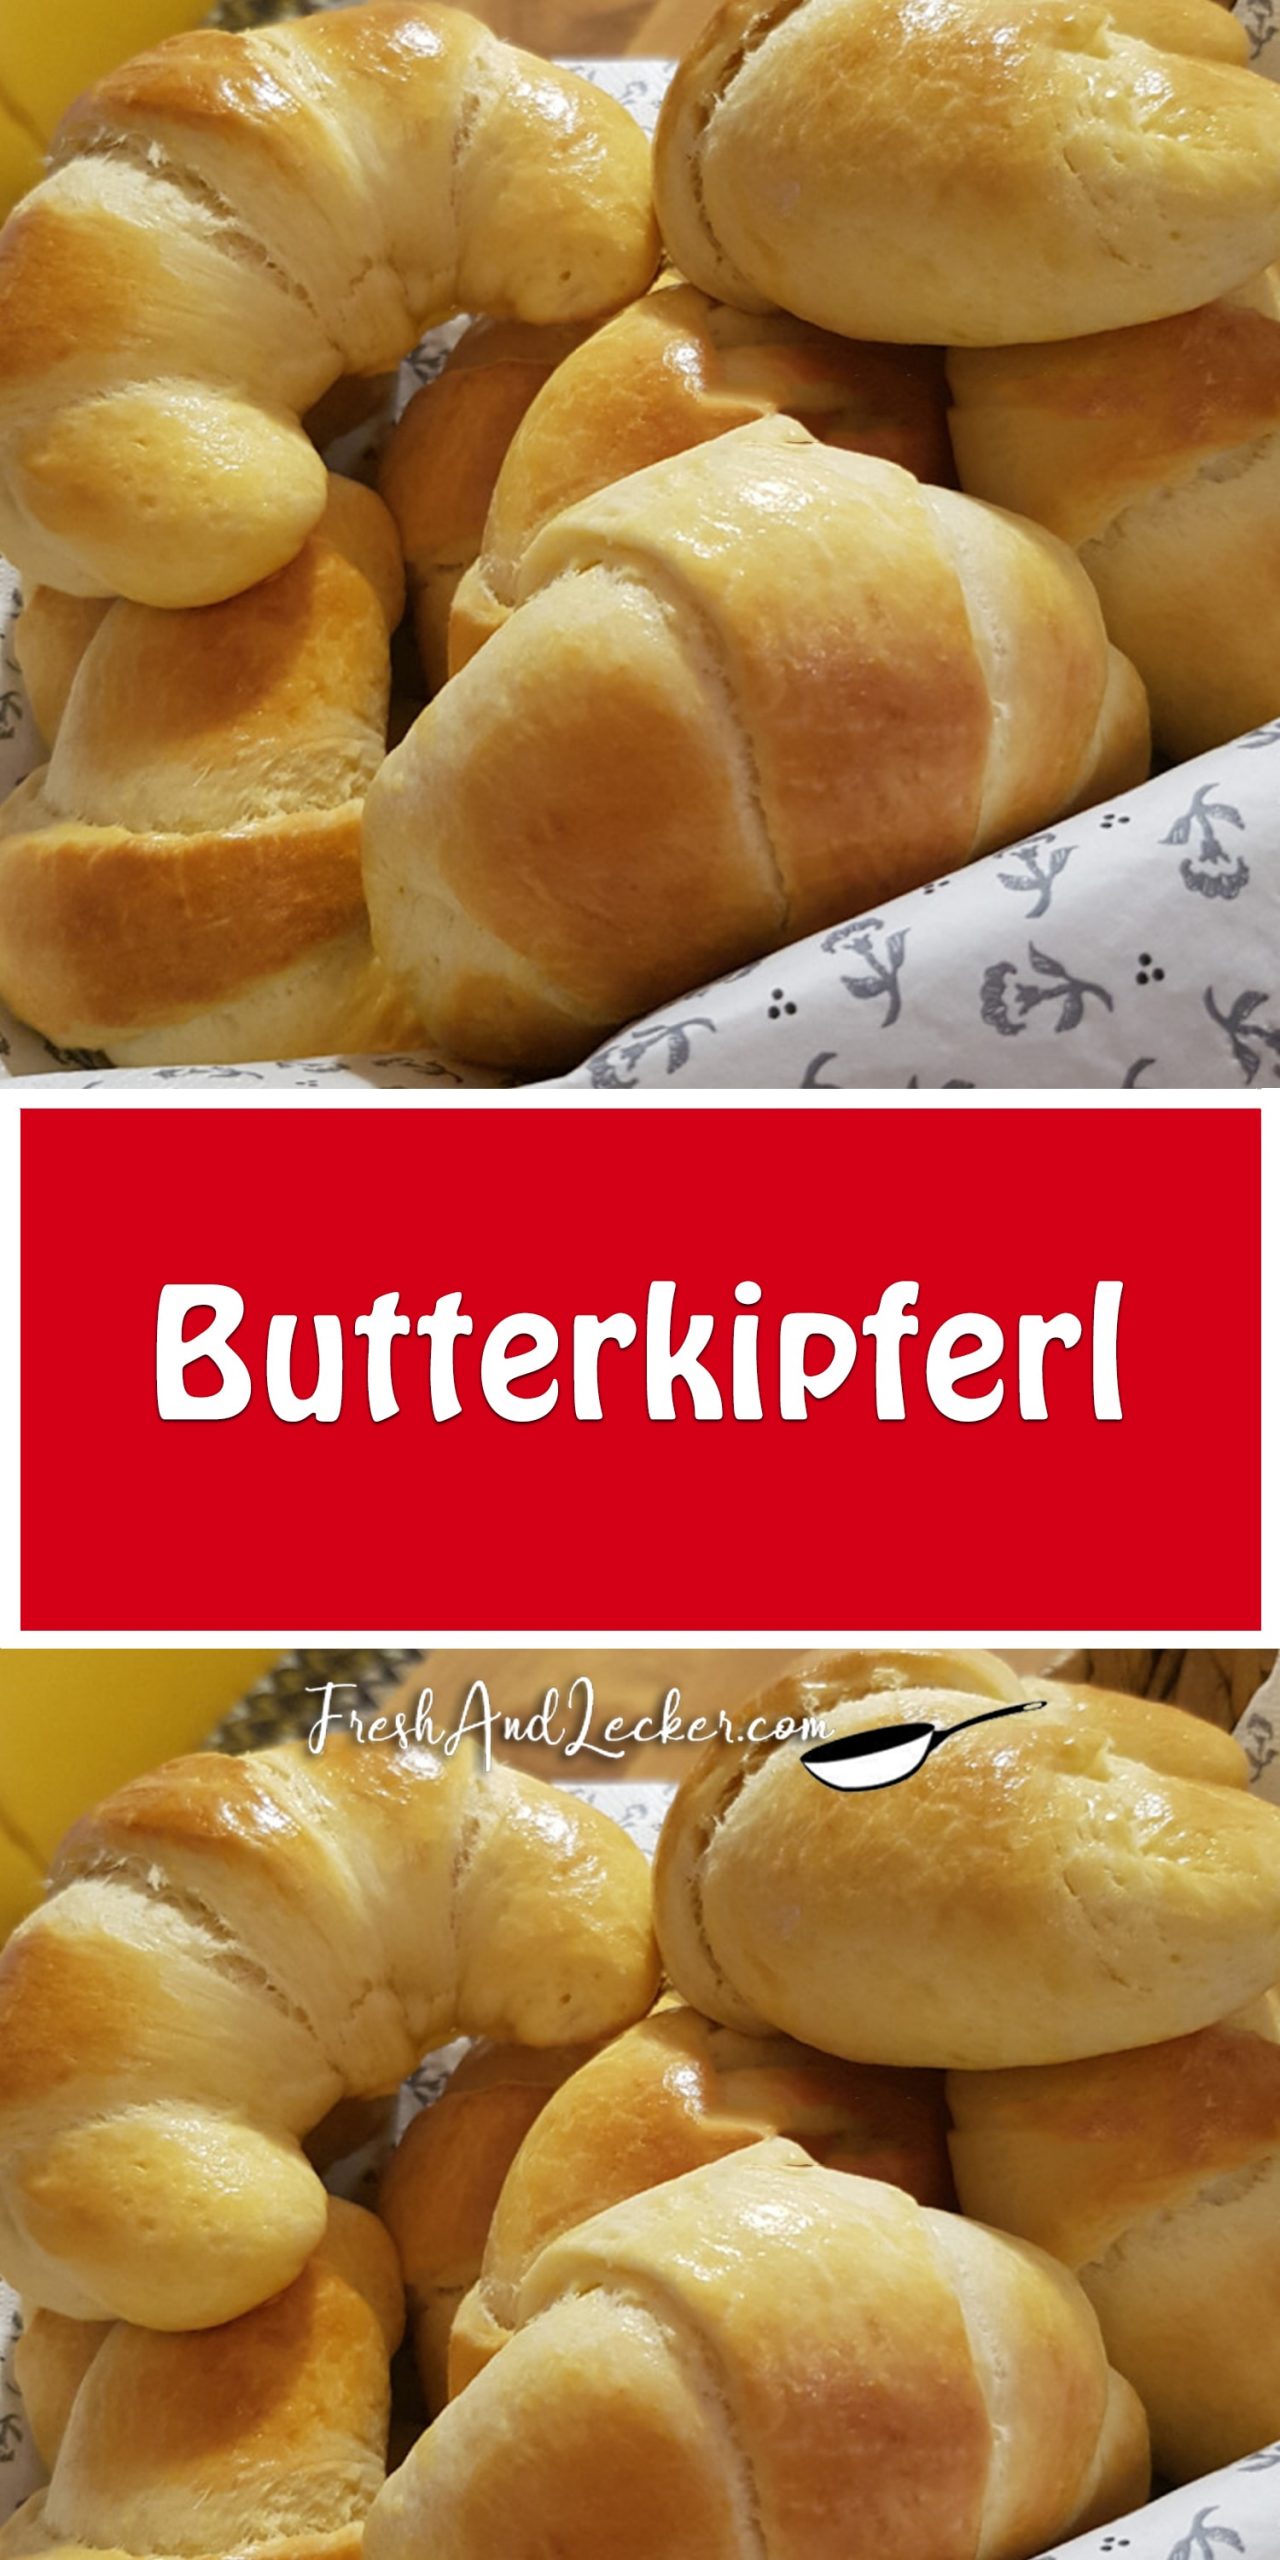 Butterkipferl - Fresh Lecker